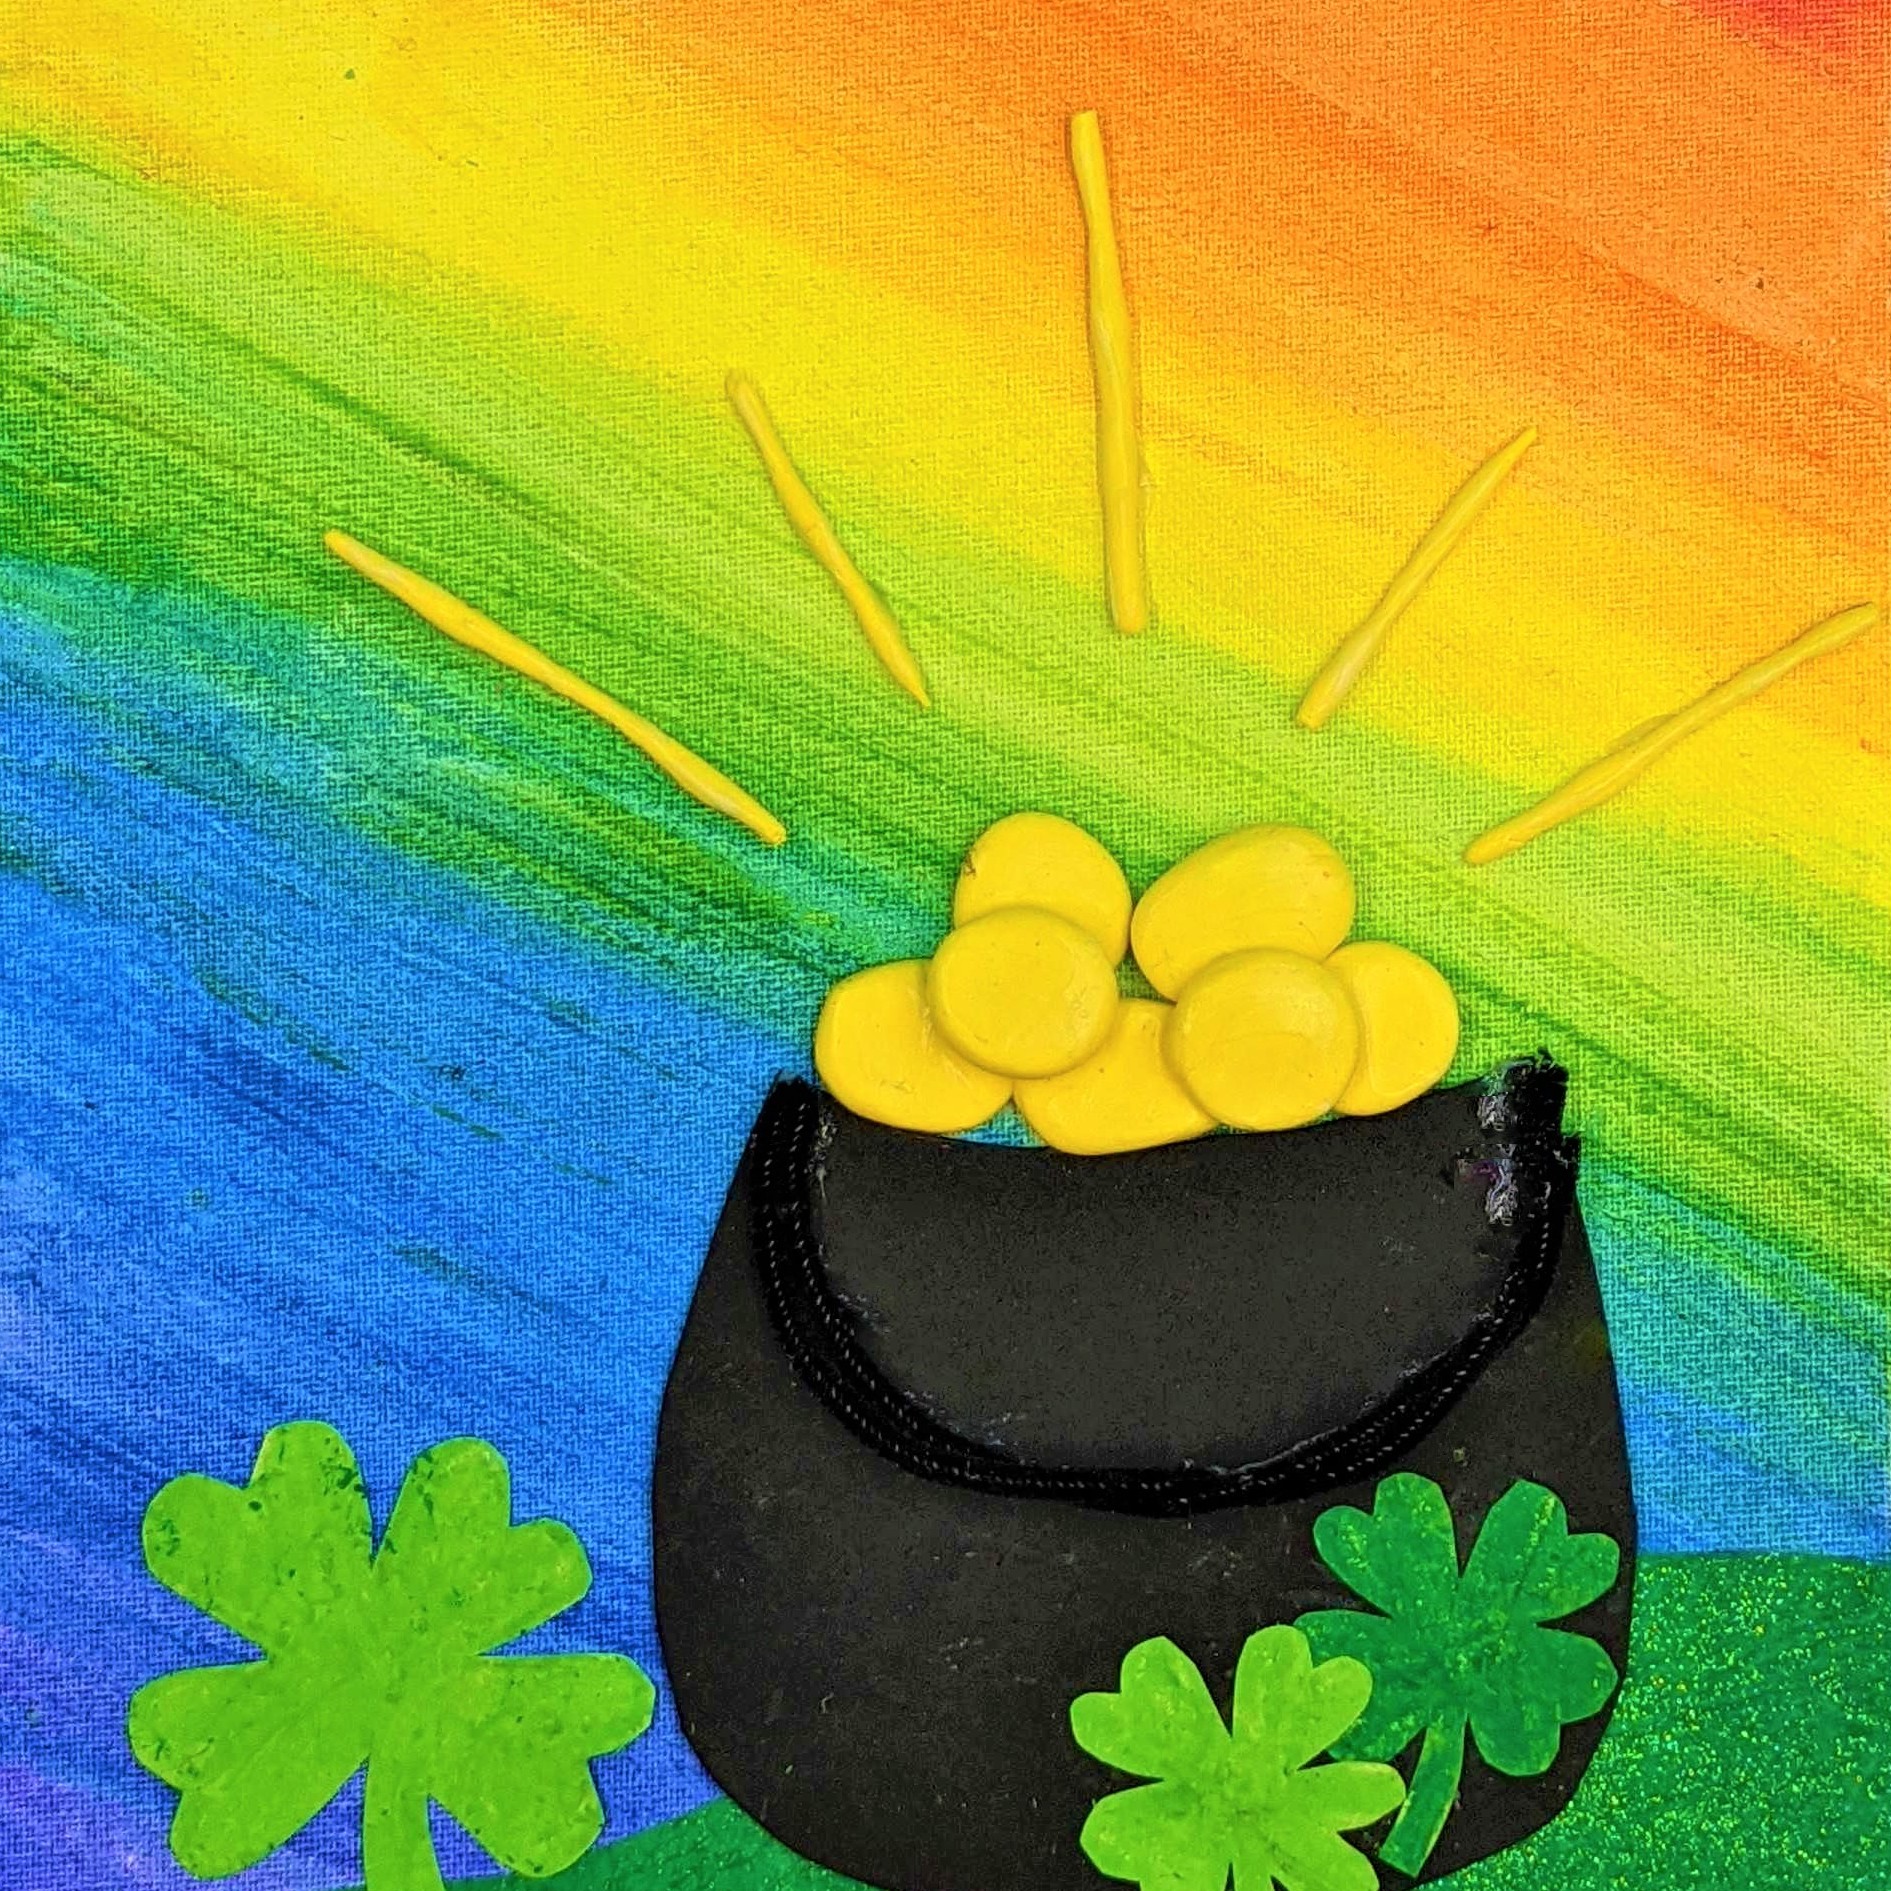 Kidcreate Studio - Mansfield, St. Patrick's Day Rainbow on Canvas Art Project